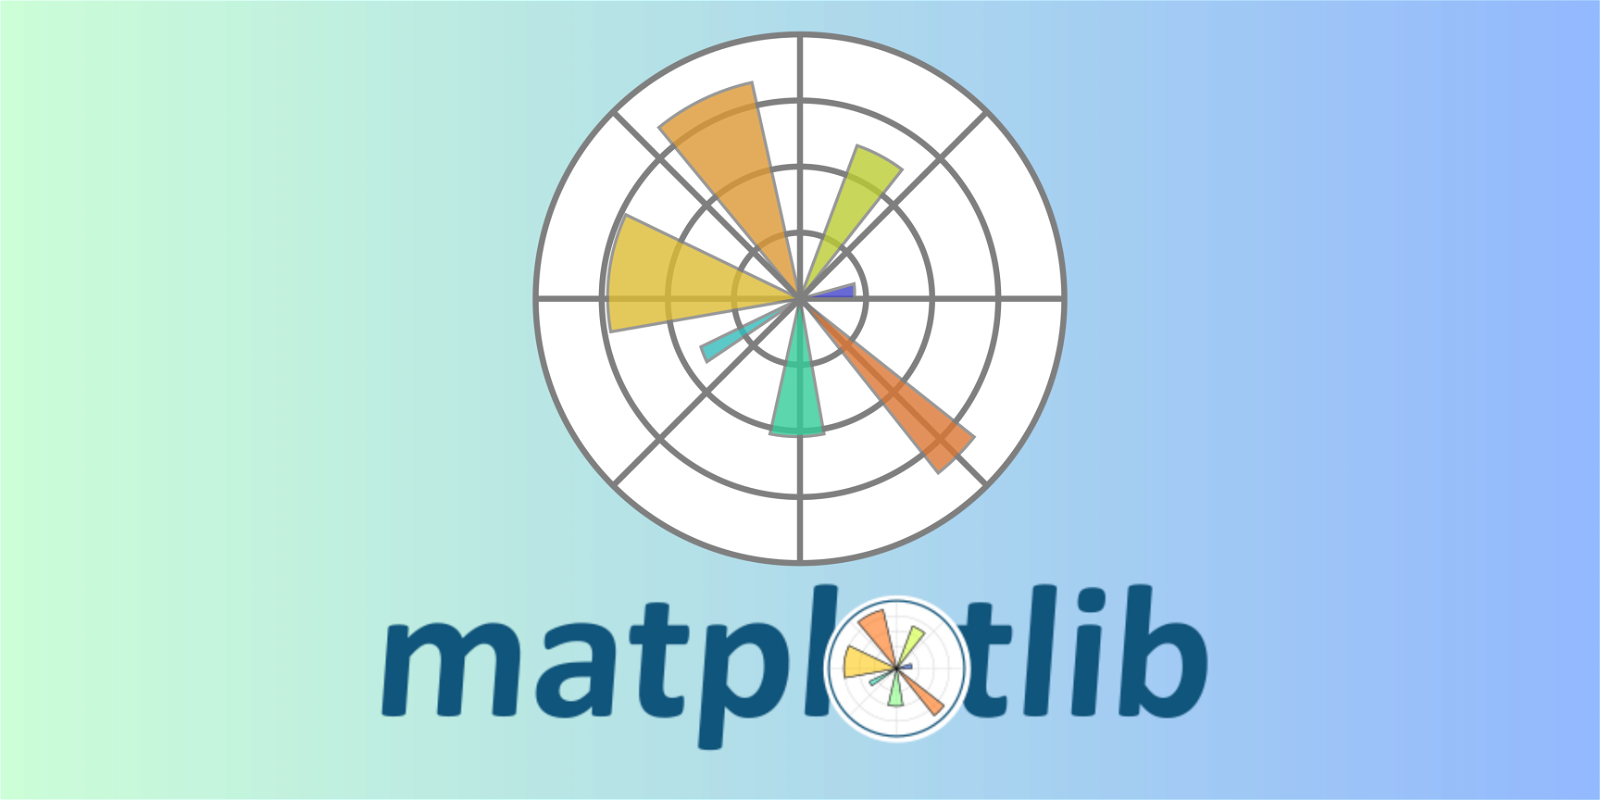 Matplotlib Python data visualization library